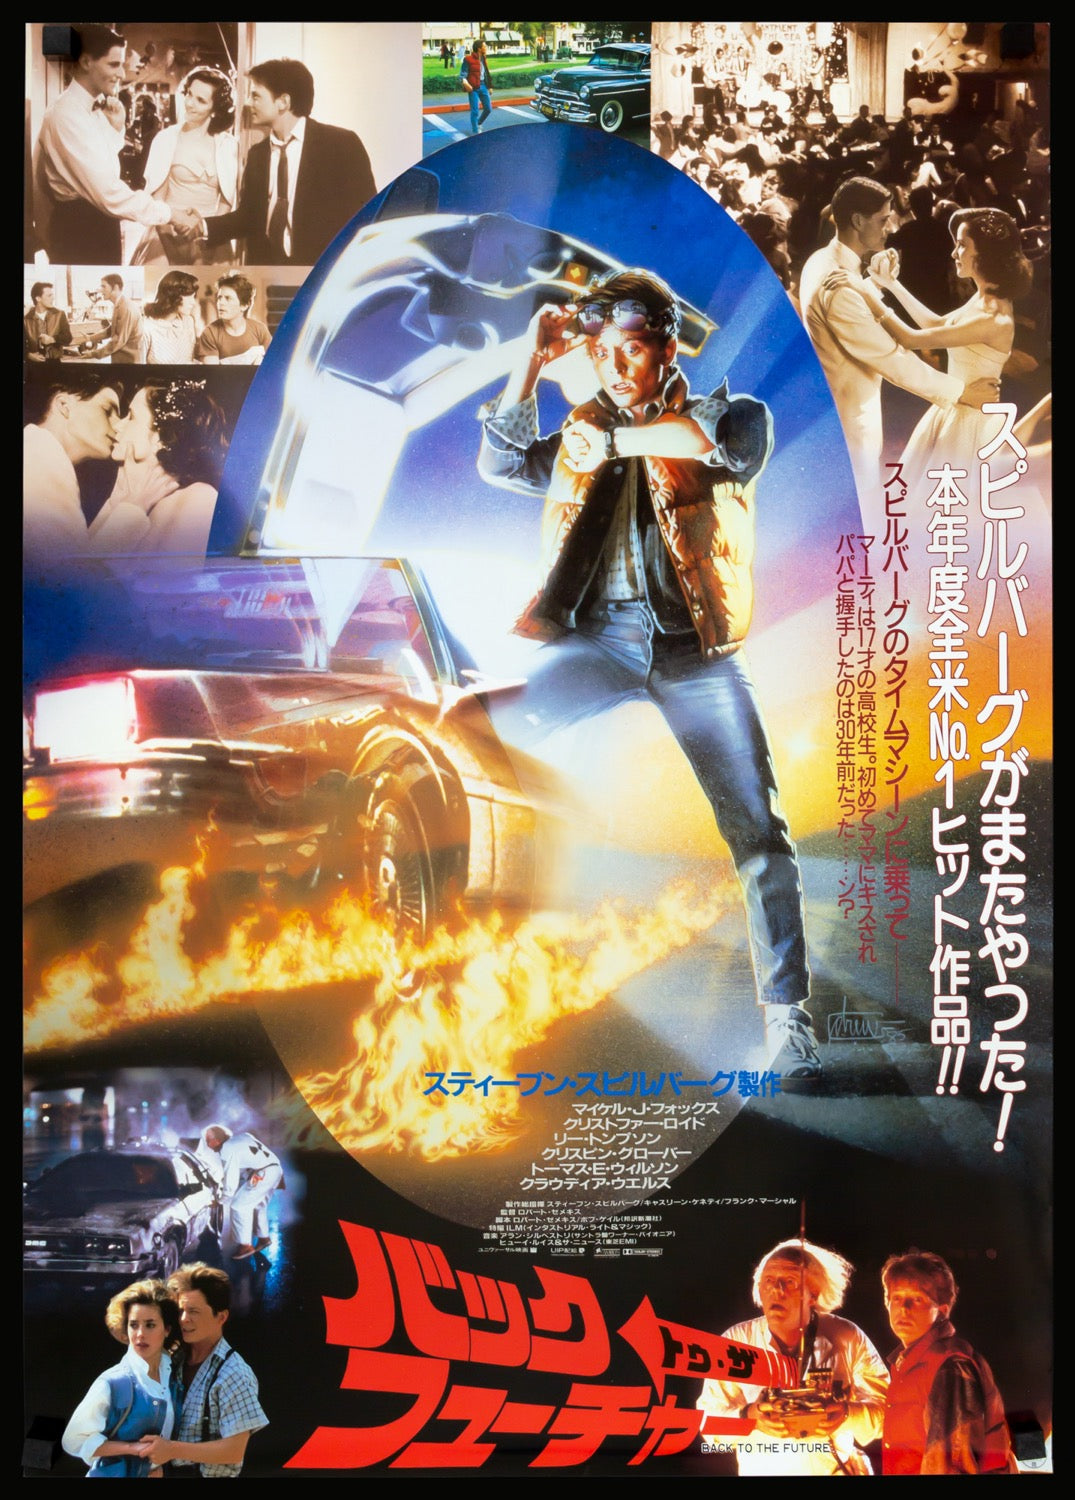 Back To the Future (1985) original movie poster for sale at Original Film Art